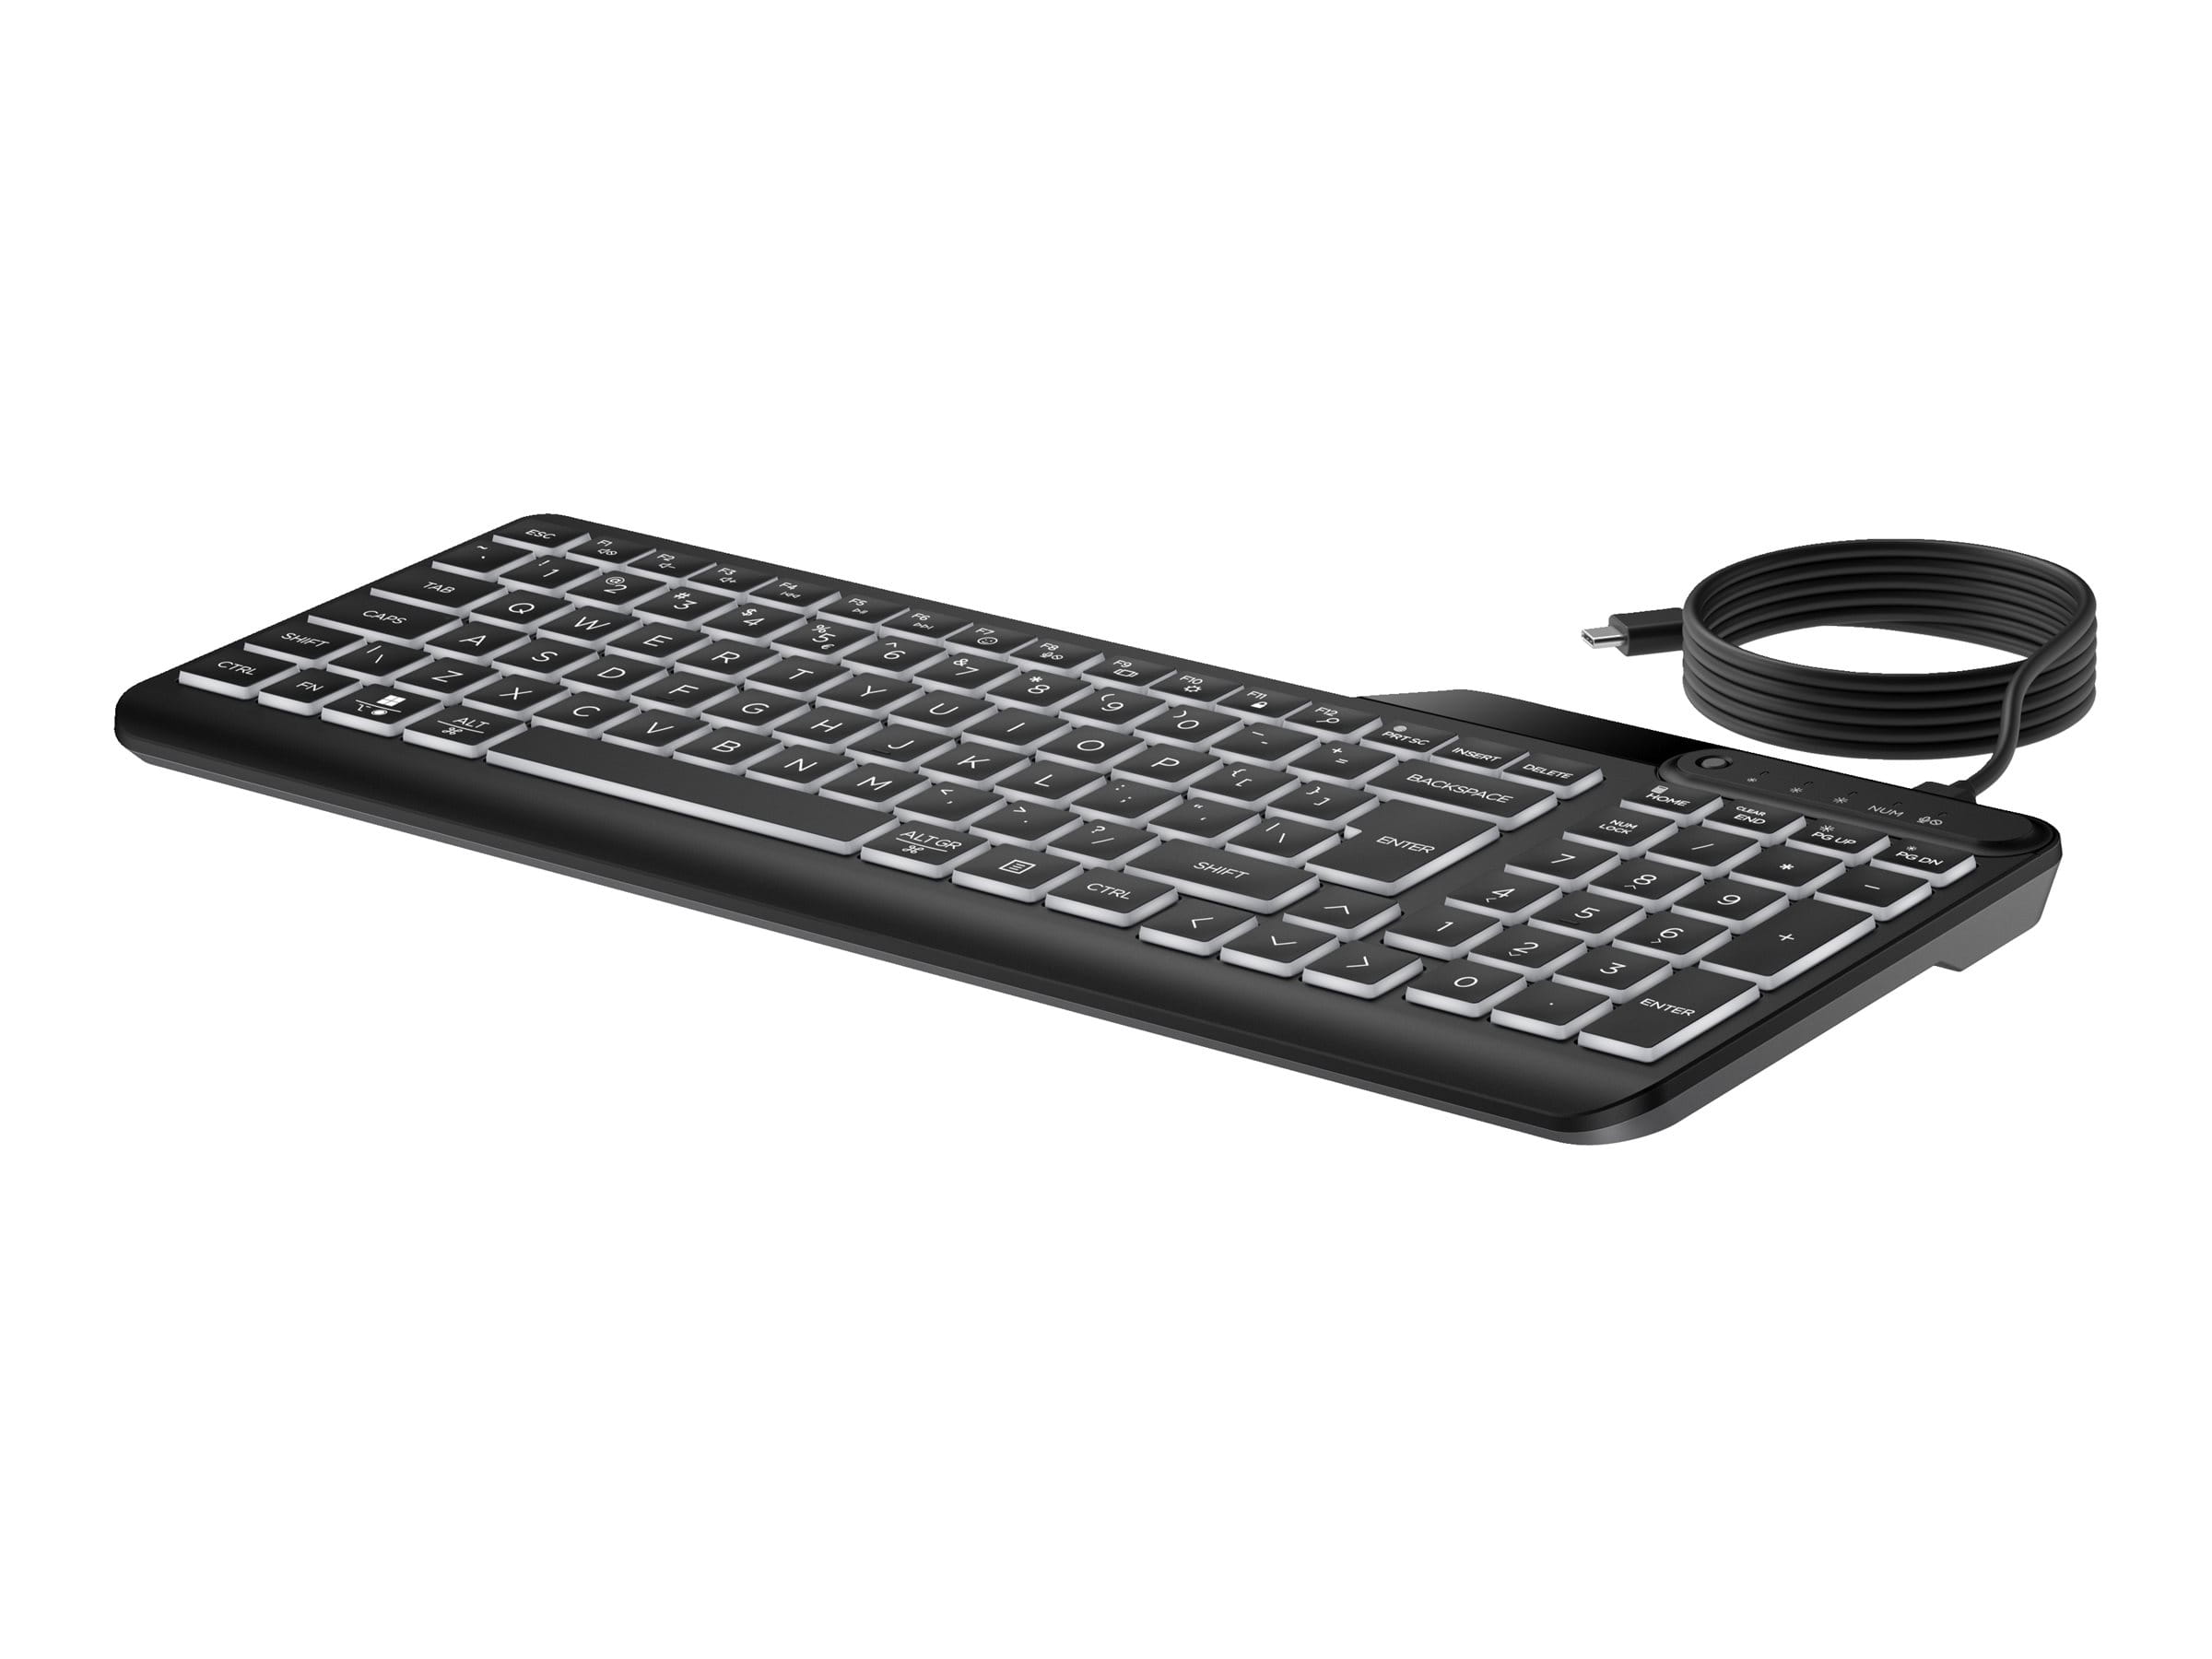 HP 400 - Tastatur - kompakte Größe, 2-Zonen-Layout, 12 programmierbare Tasten, geringer Tastenhub, Multi-Device